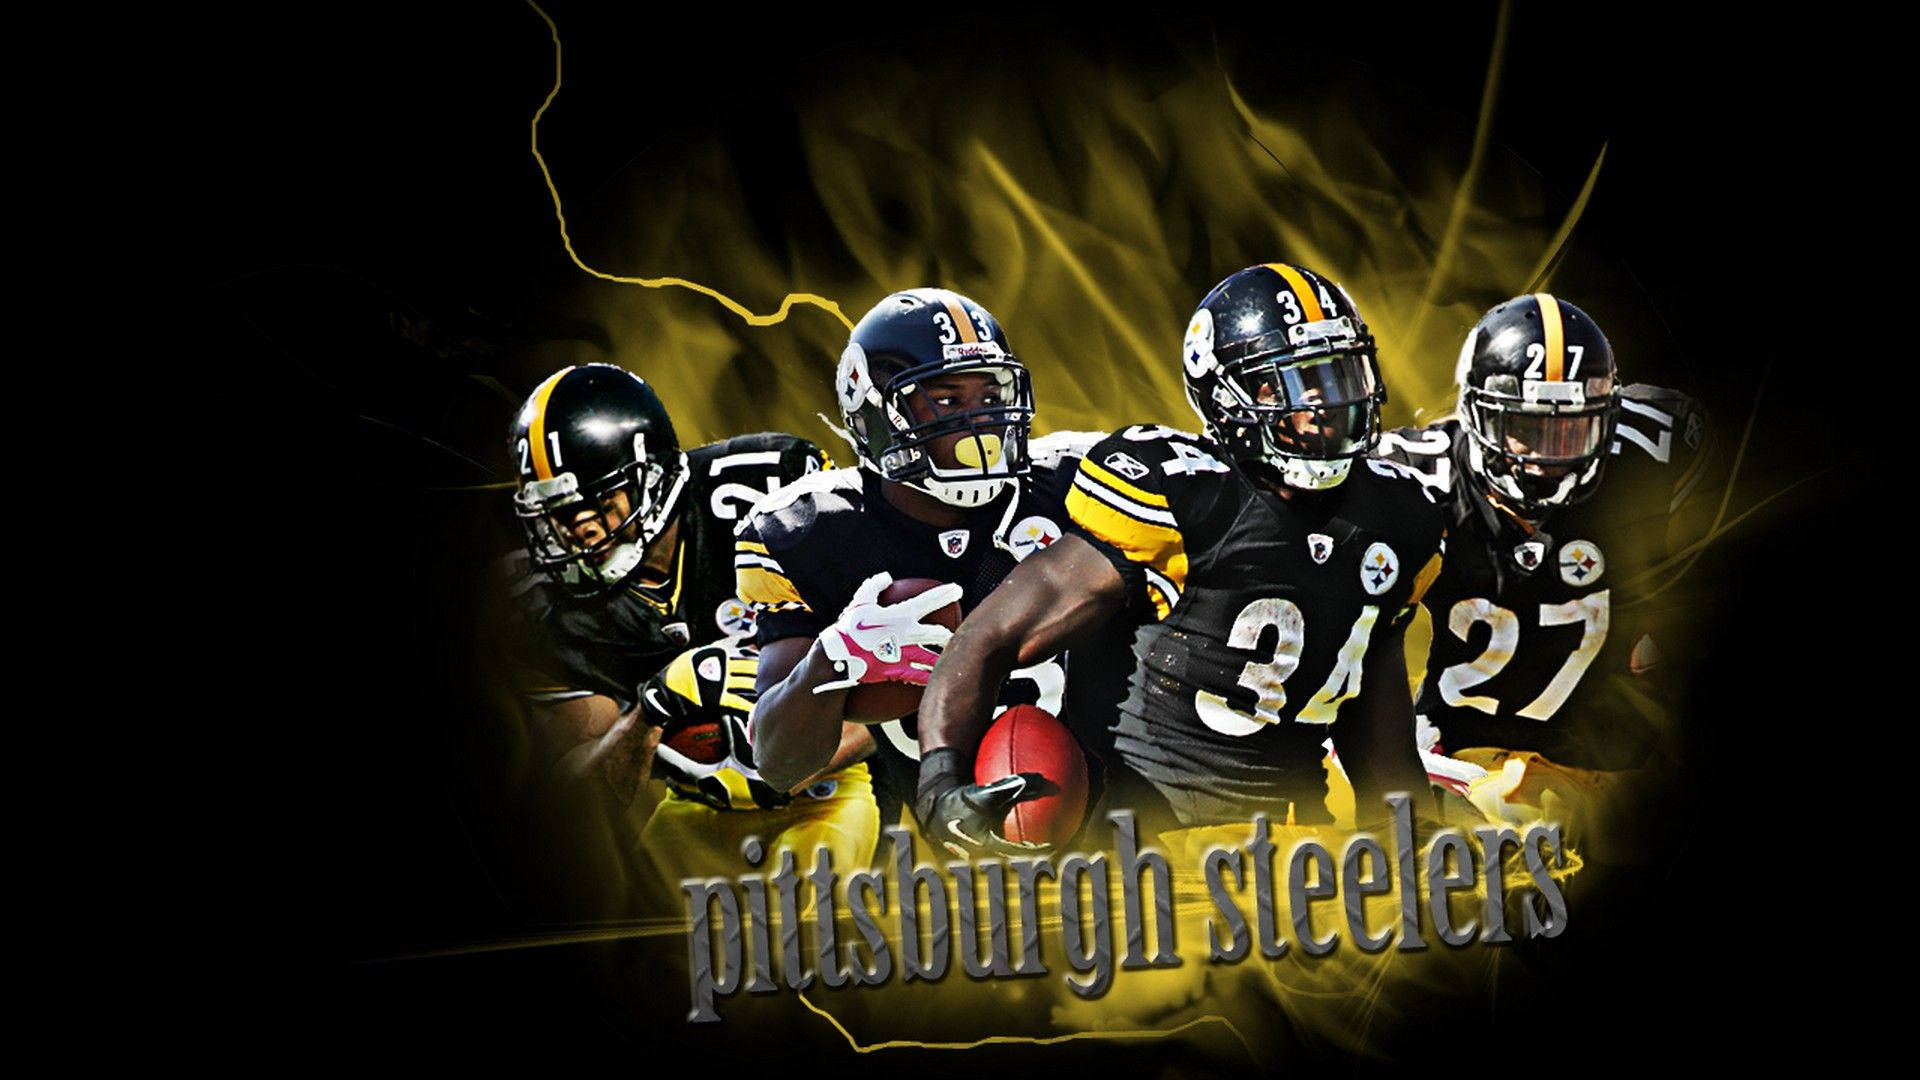 Cool Nfl Pittsburgh Steelers Wallpaper